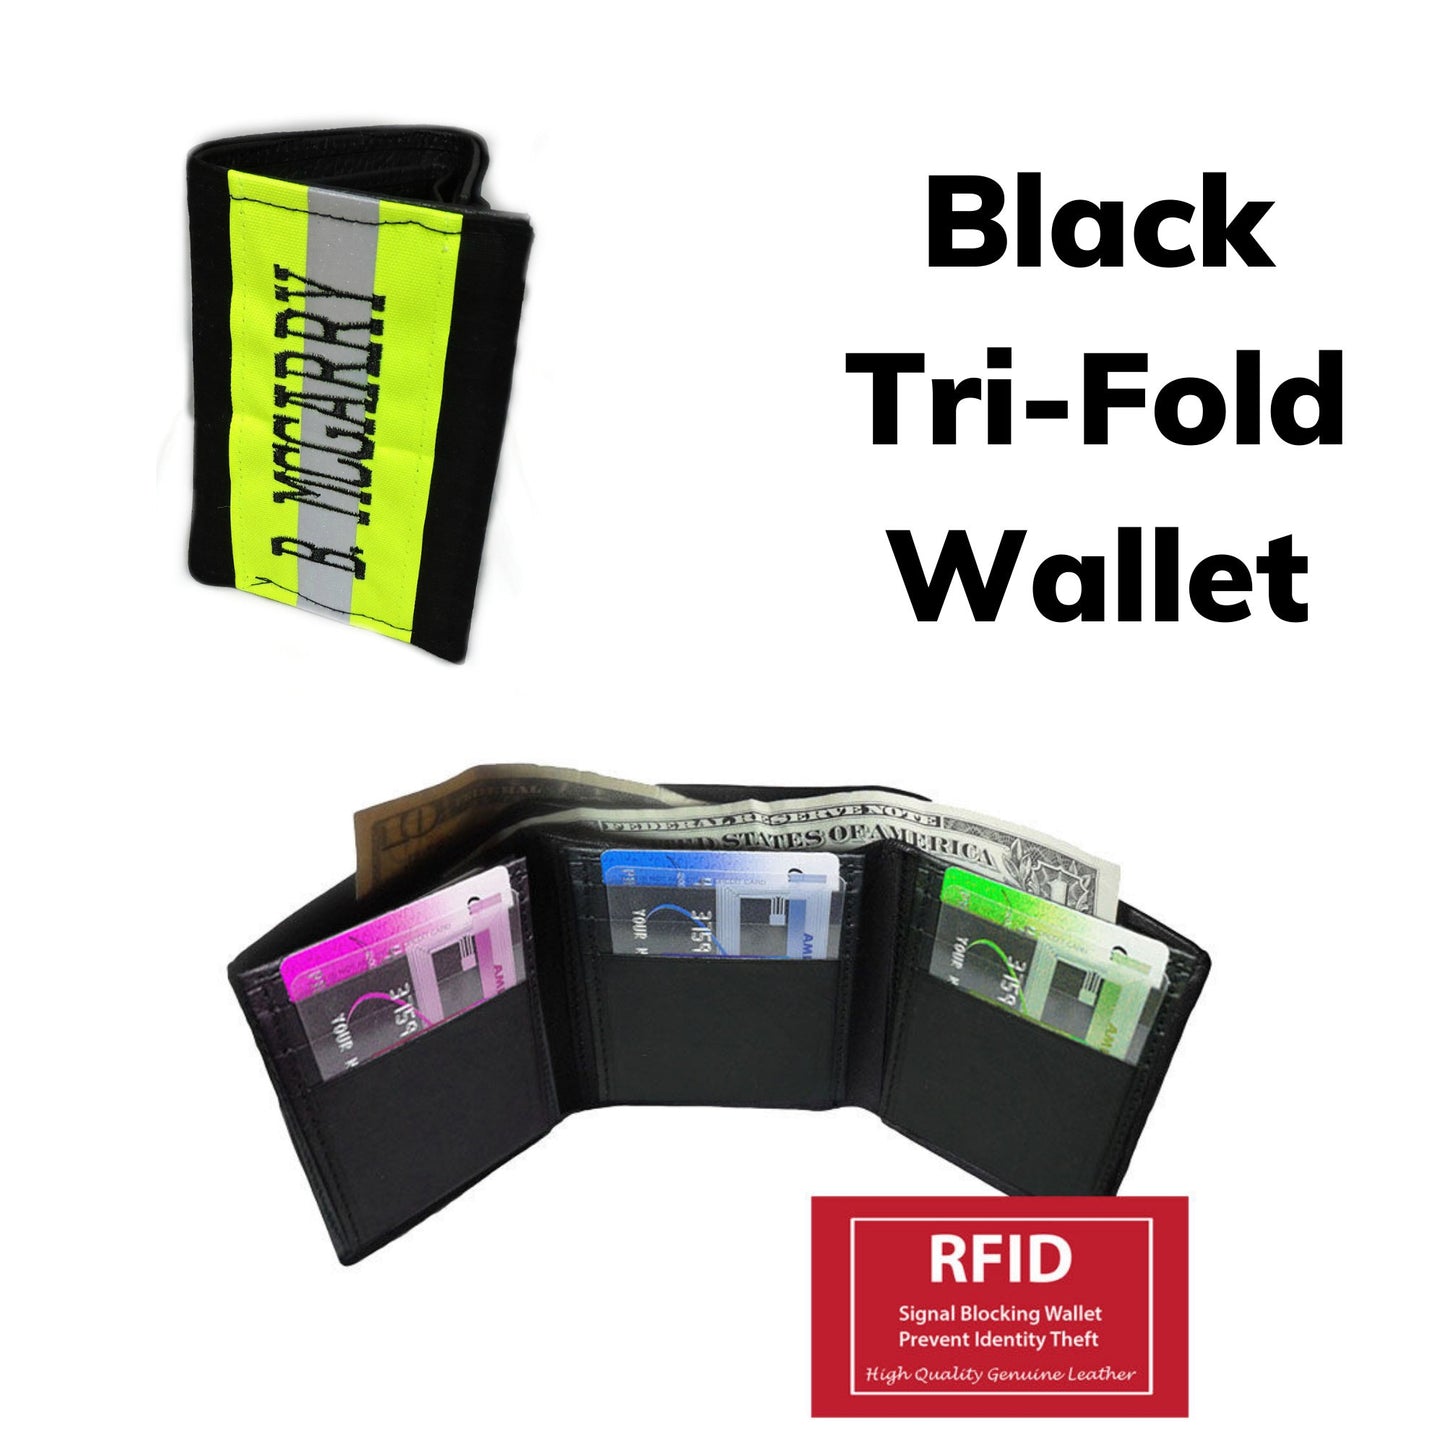 Black Tri-fold wallet with RFID